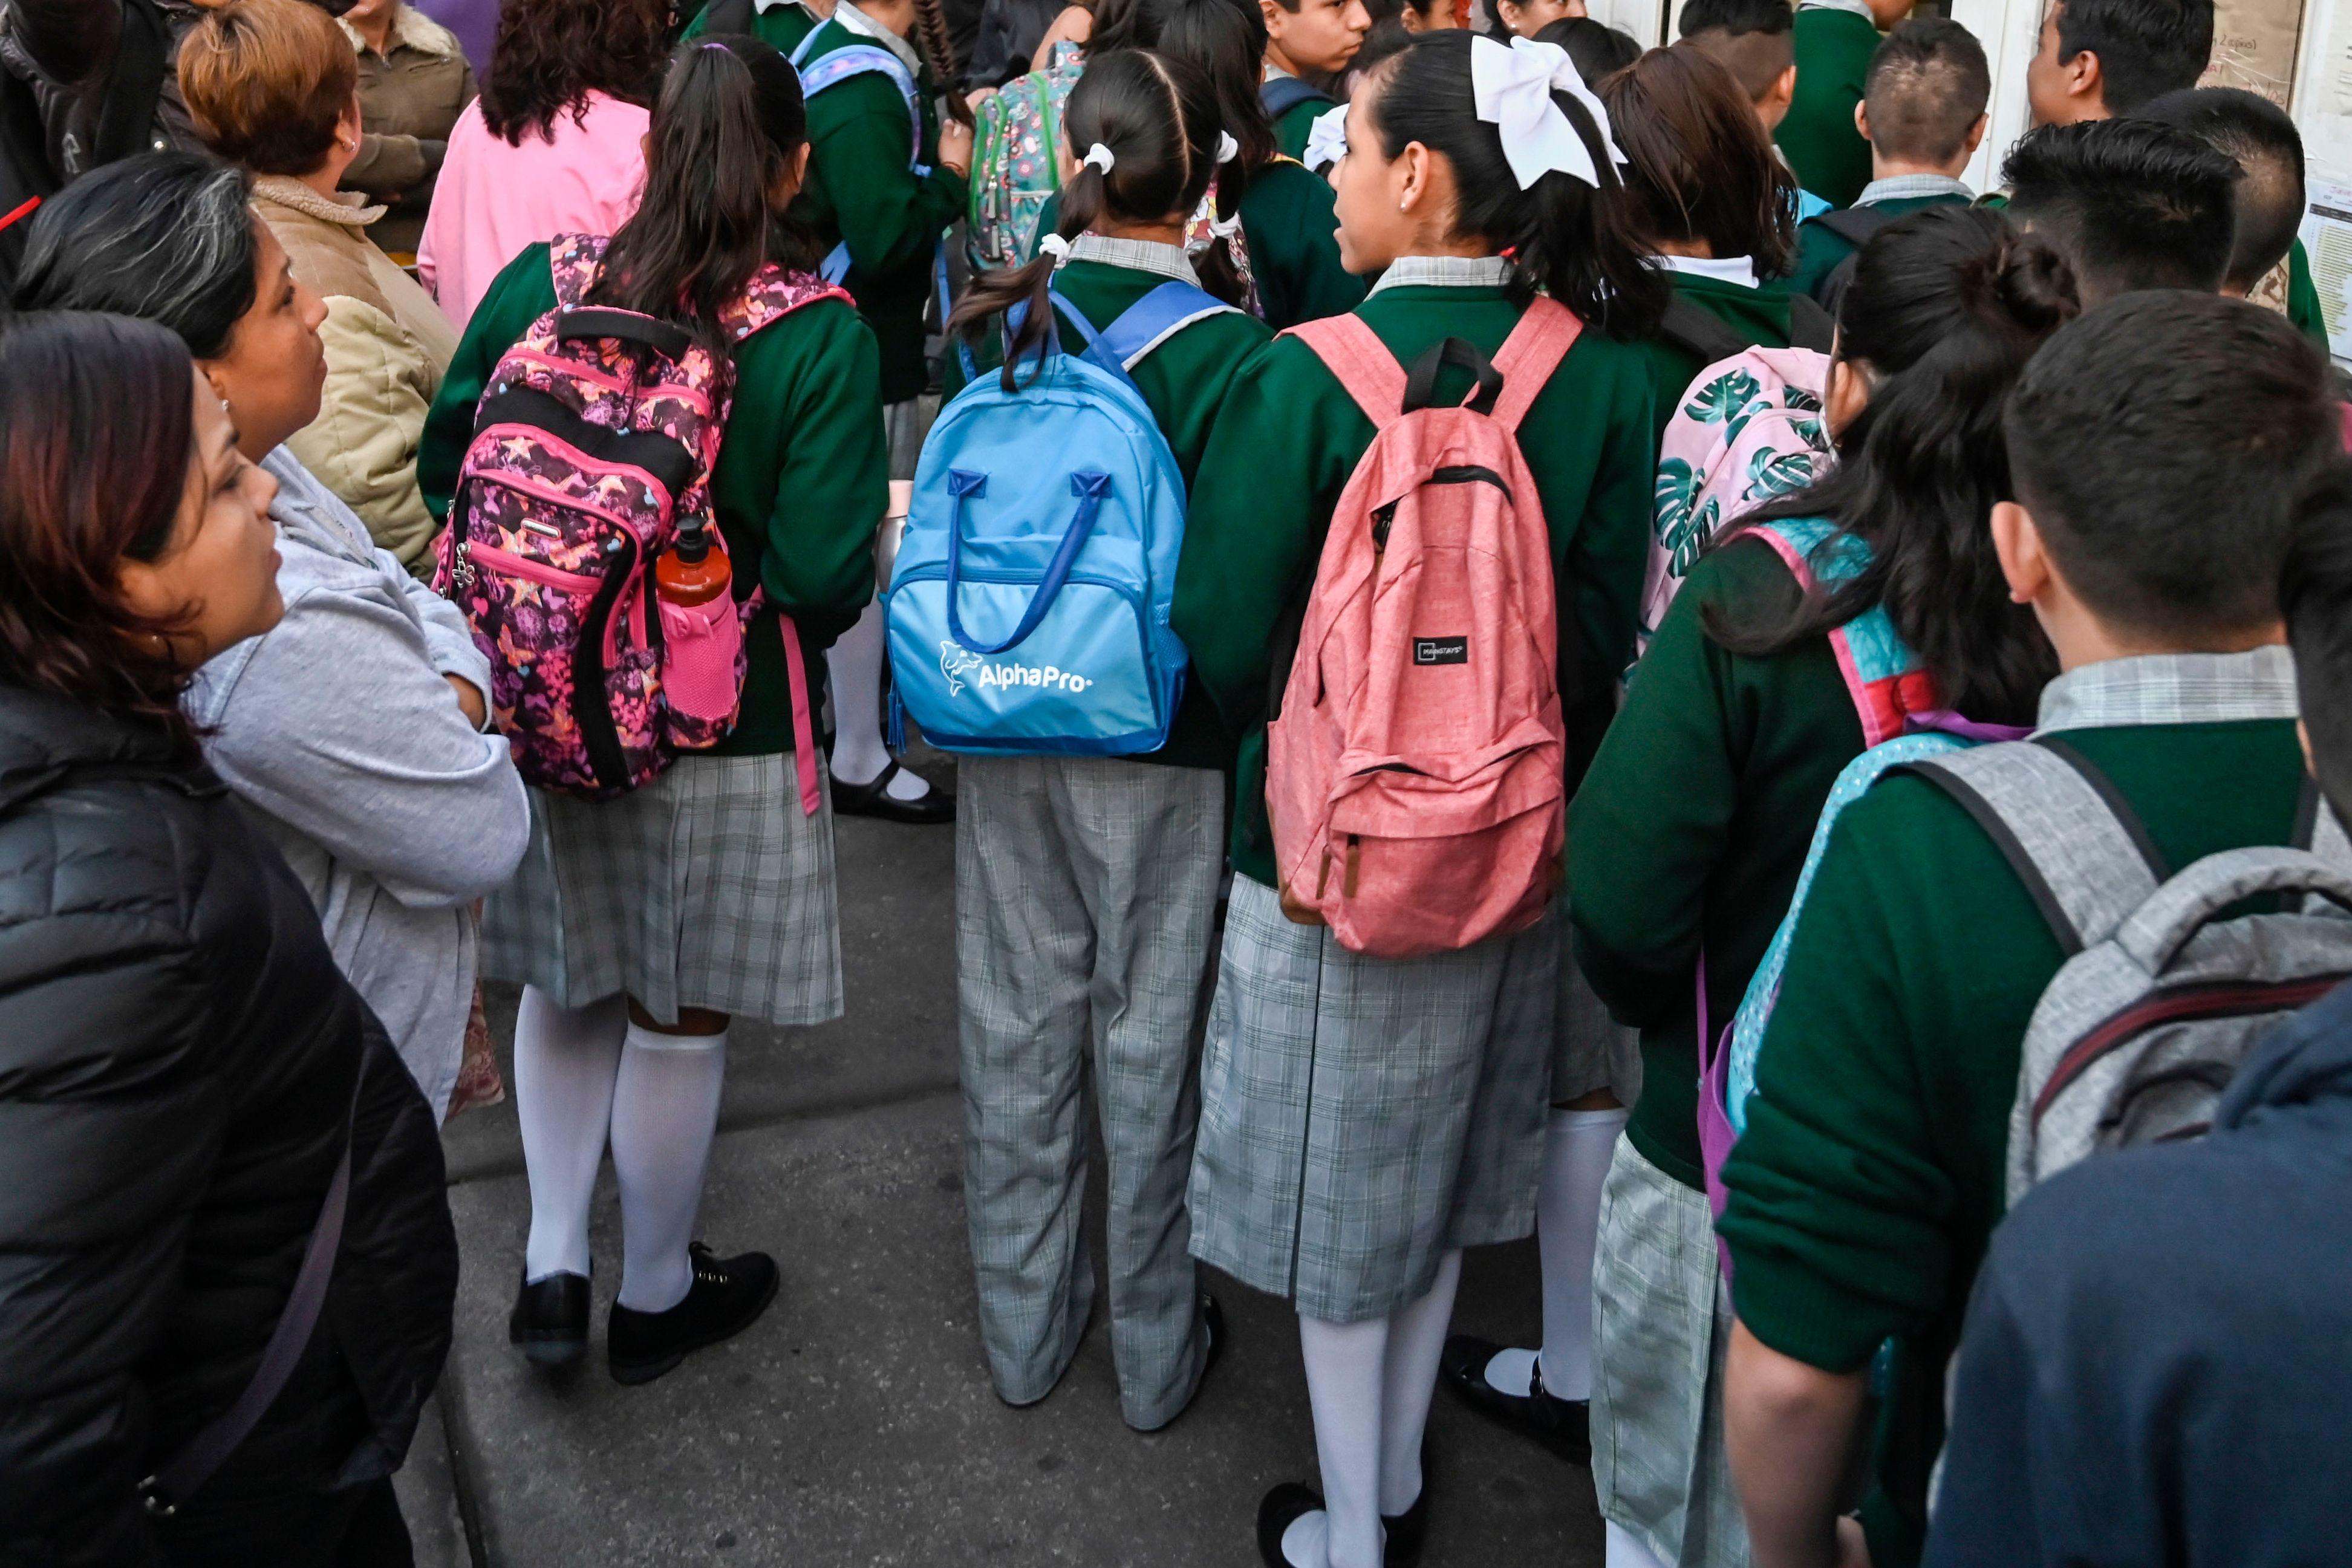 A crowd of uniformed schoolchildren including girls wearing skirts